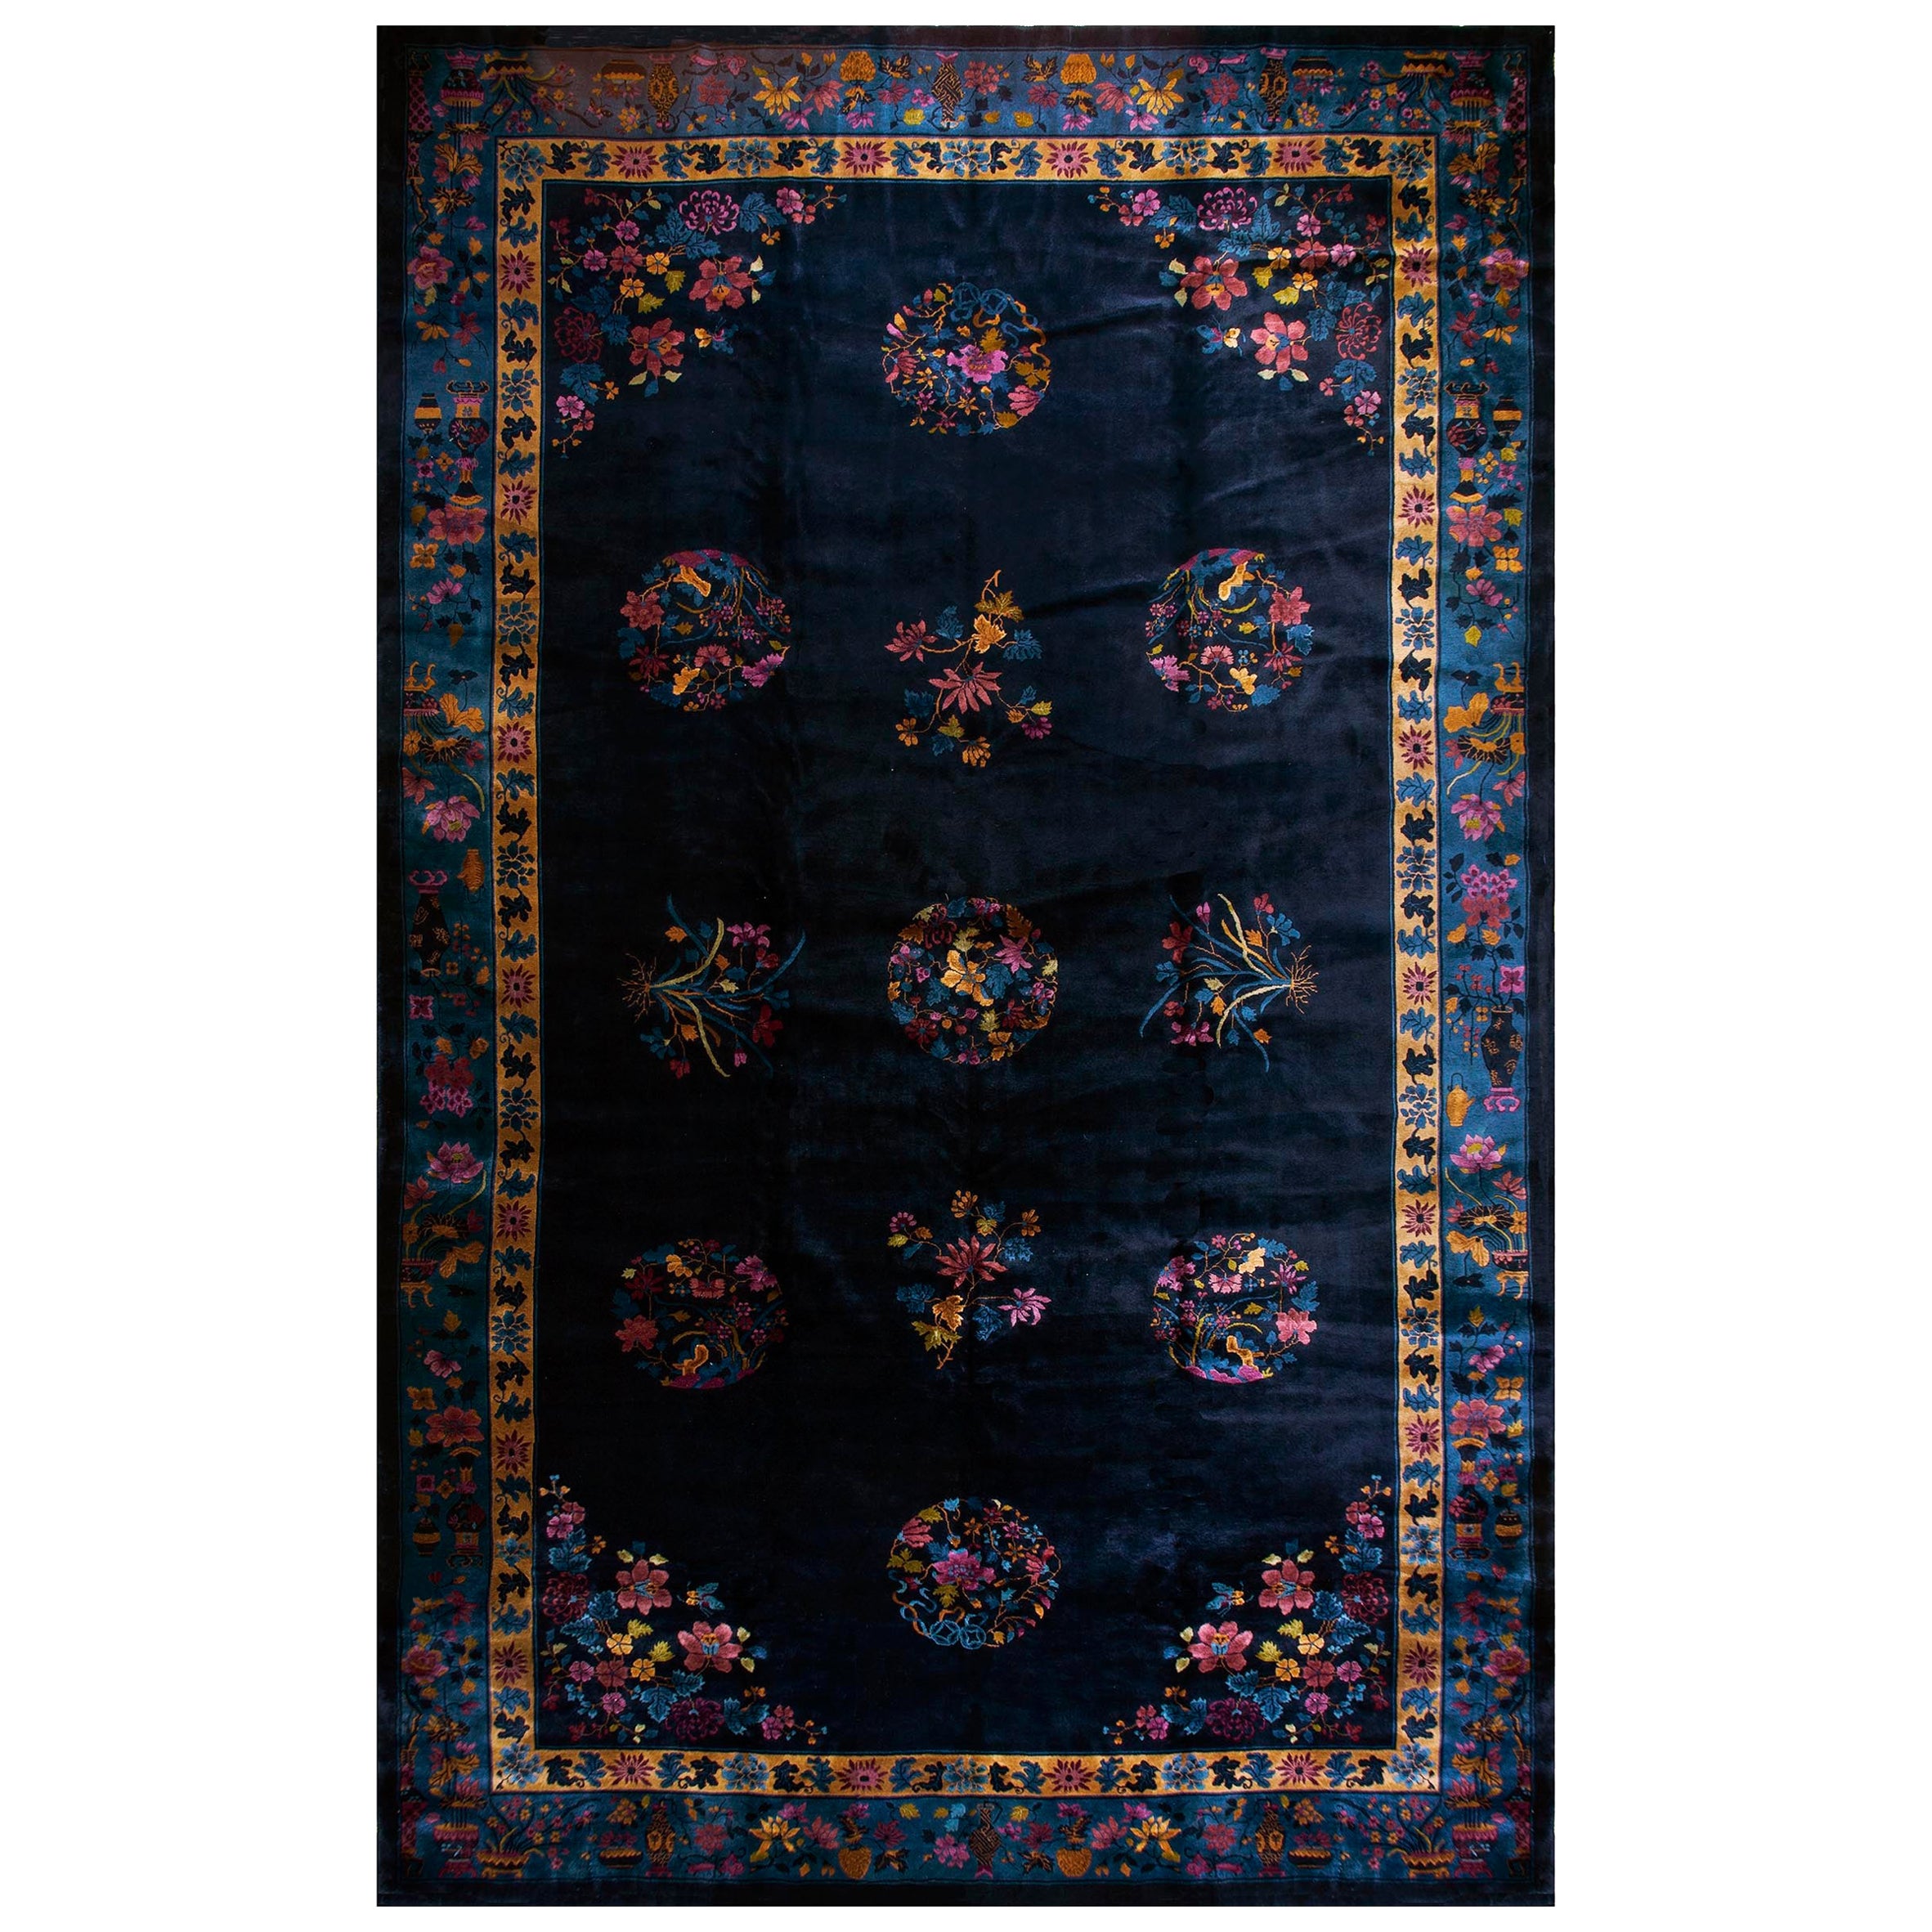 1920s Chinese Art Deco Carpet (  12'5" x 20'3" - 380 x 618 )